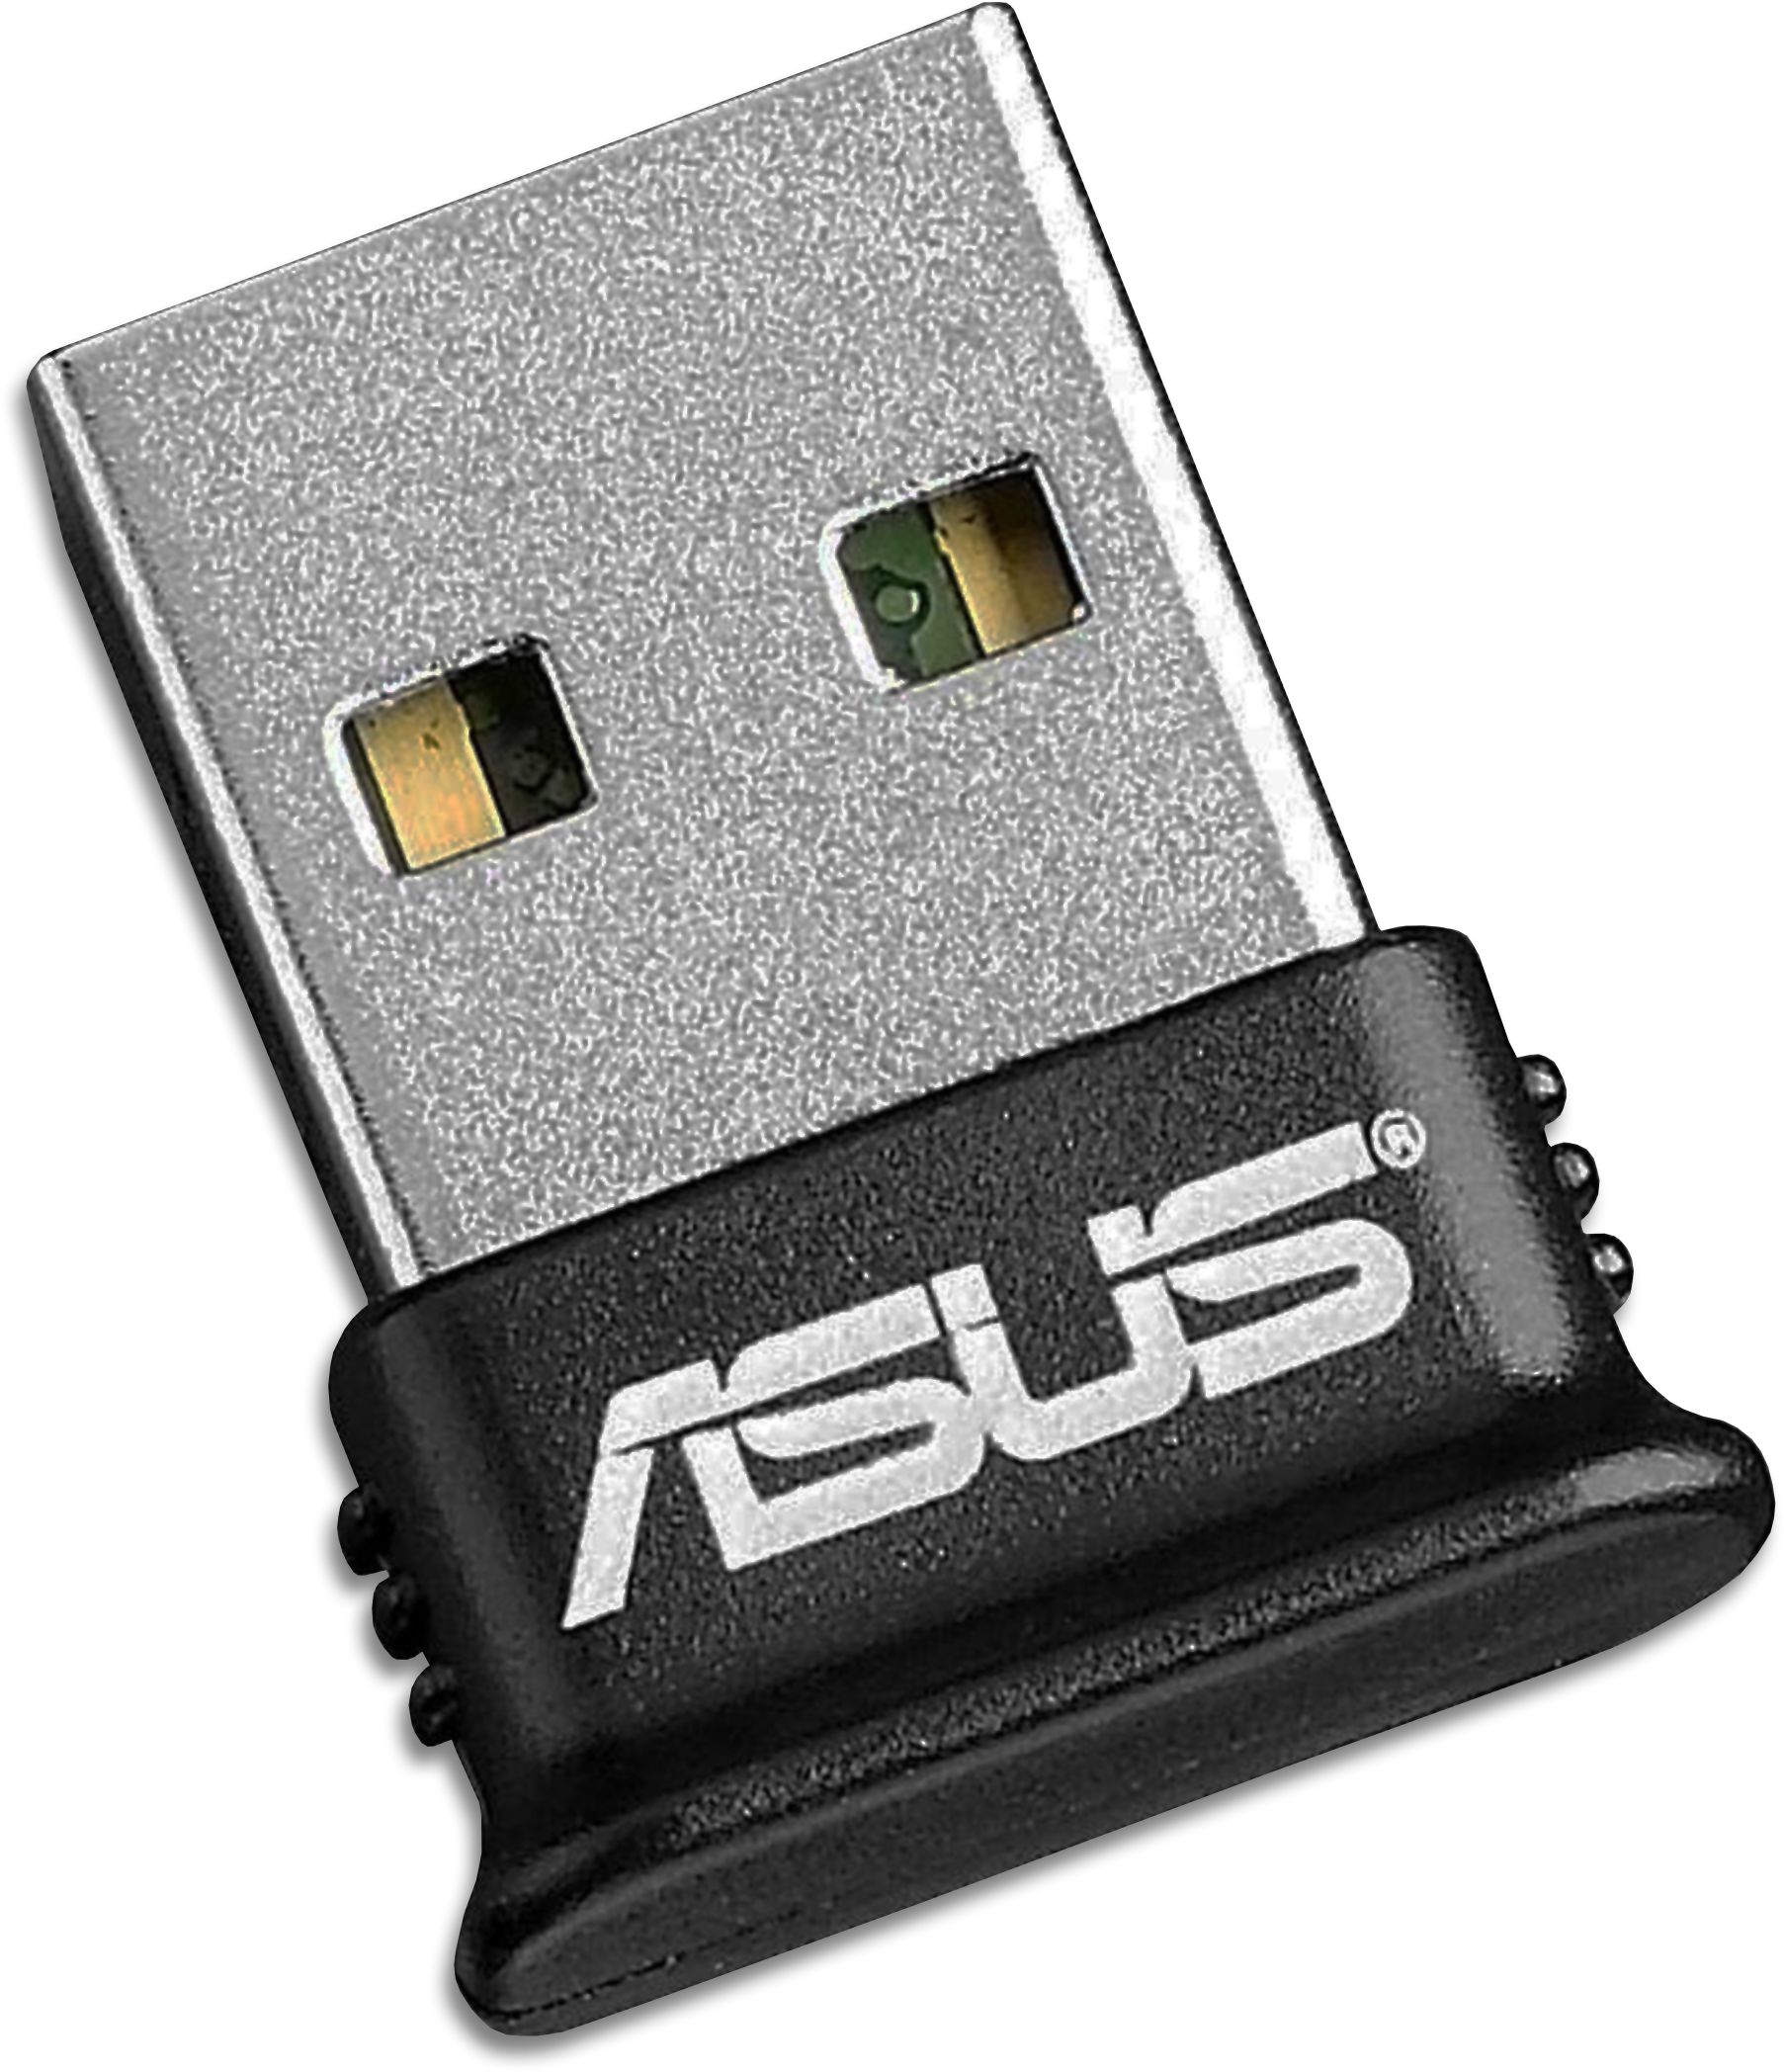 ASUS USB-BT400 3 Mbps USB Bluetooth Dongle v4.0 MINI 